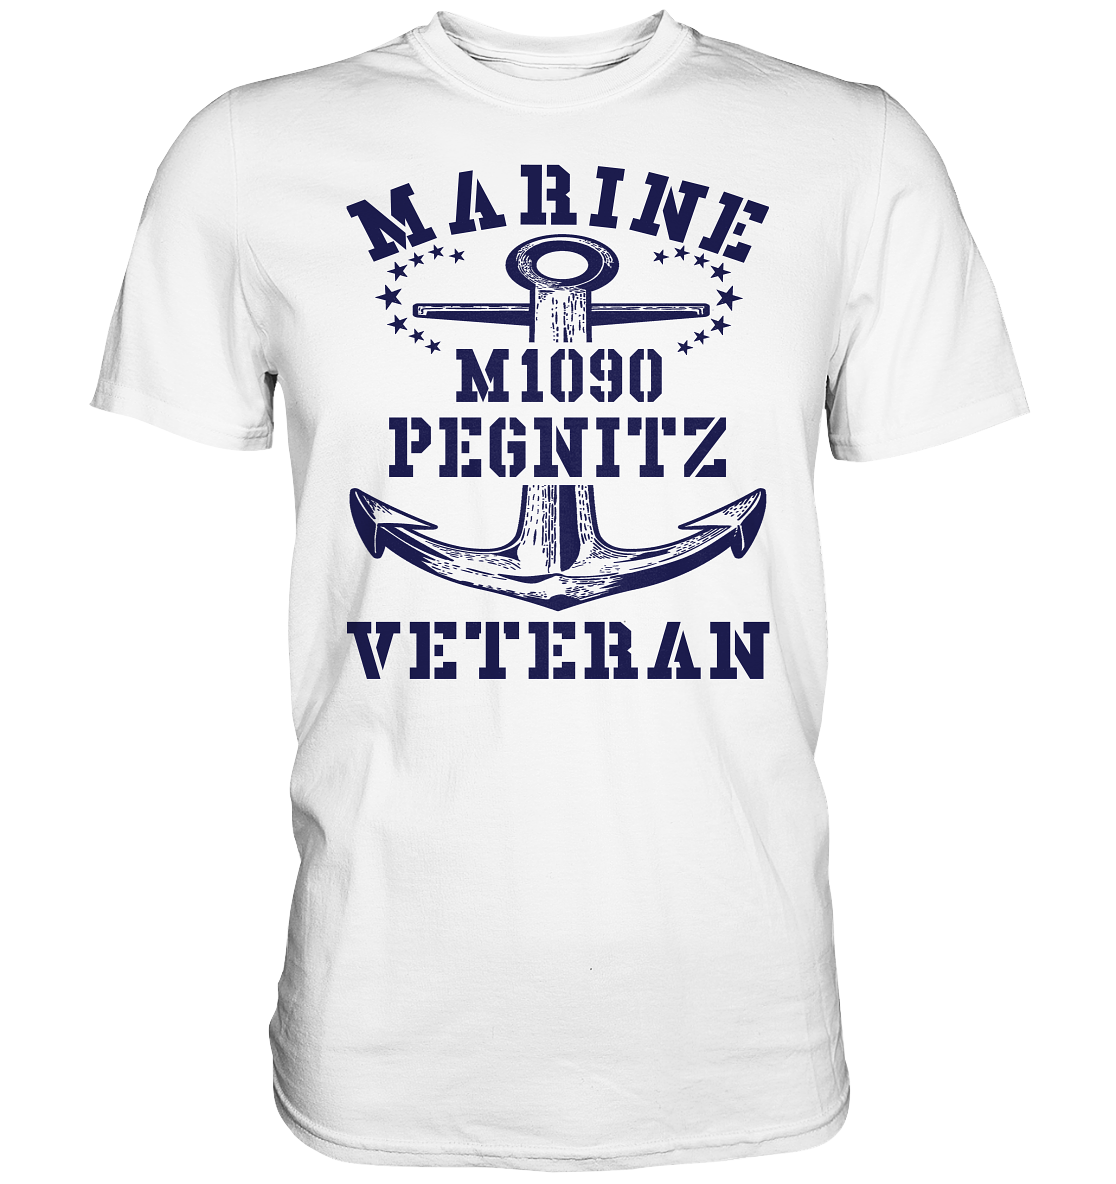 M1090 PEGNITZ Marine Veteran - Premium Shirt